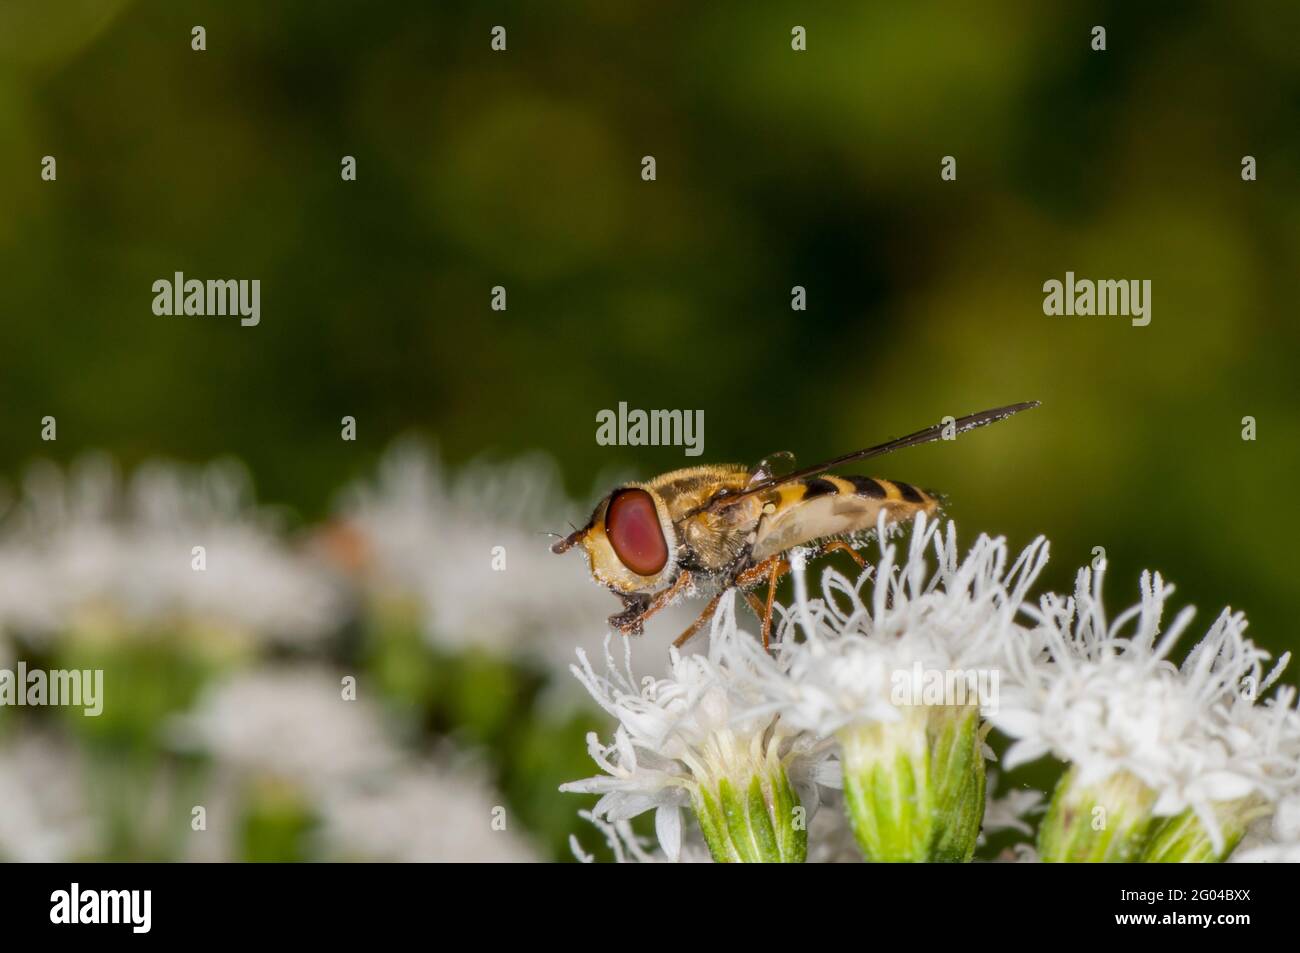 Vadnais Heights, Minnesota. Bosque de John H. Allison. Vista lateral de primer plano de una mosca de la flor alimentándose de la flor blanca del snakeroot a finales del verano. Foto de stock